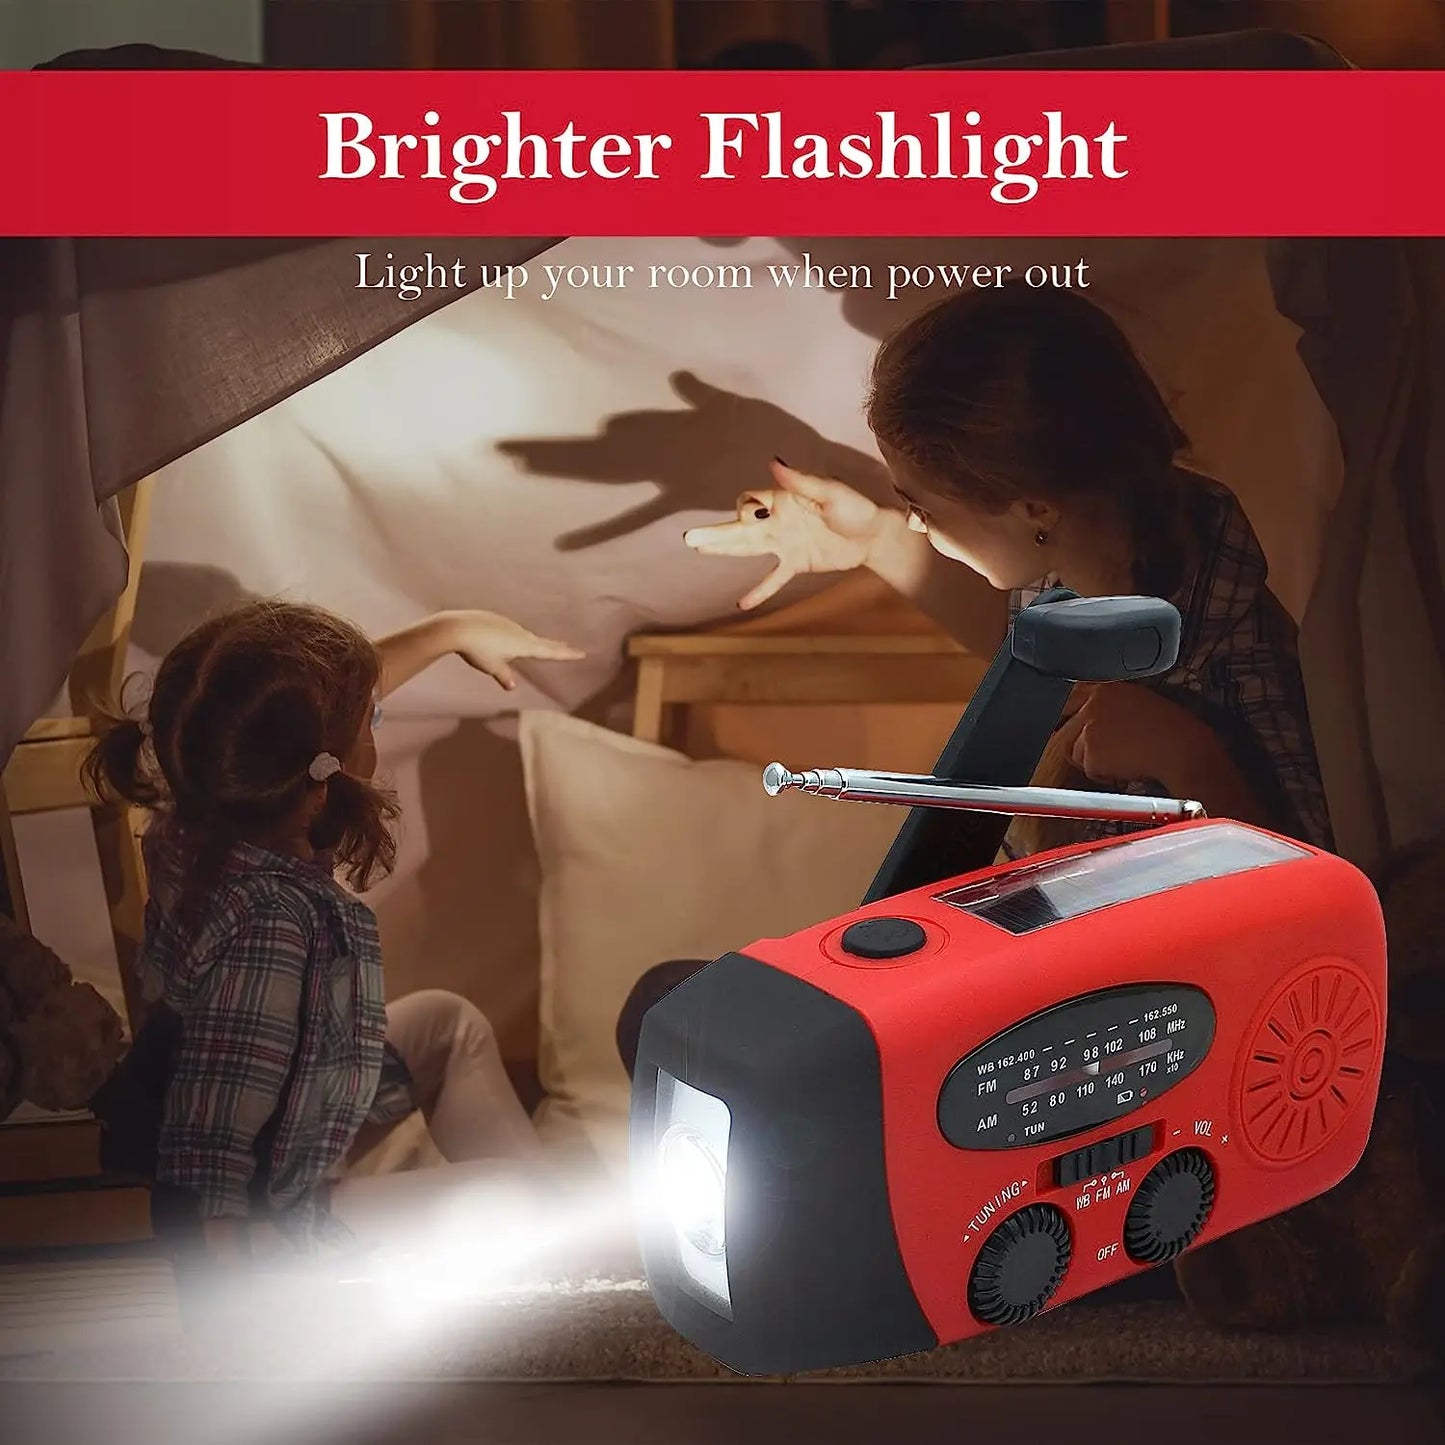 Solar Hand Crank Powered Camping Light With AM/FM Radio Outdoor 2000mAh USB Charging Multifunctional Hand Dynamo LED Flashlight